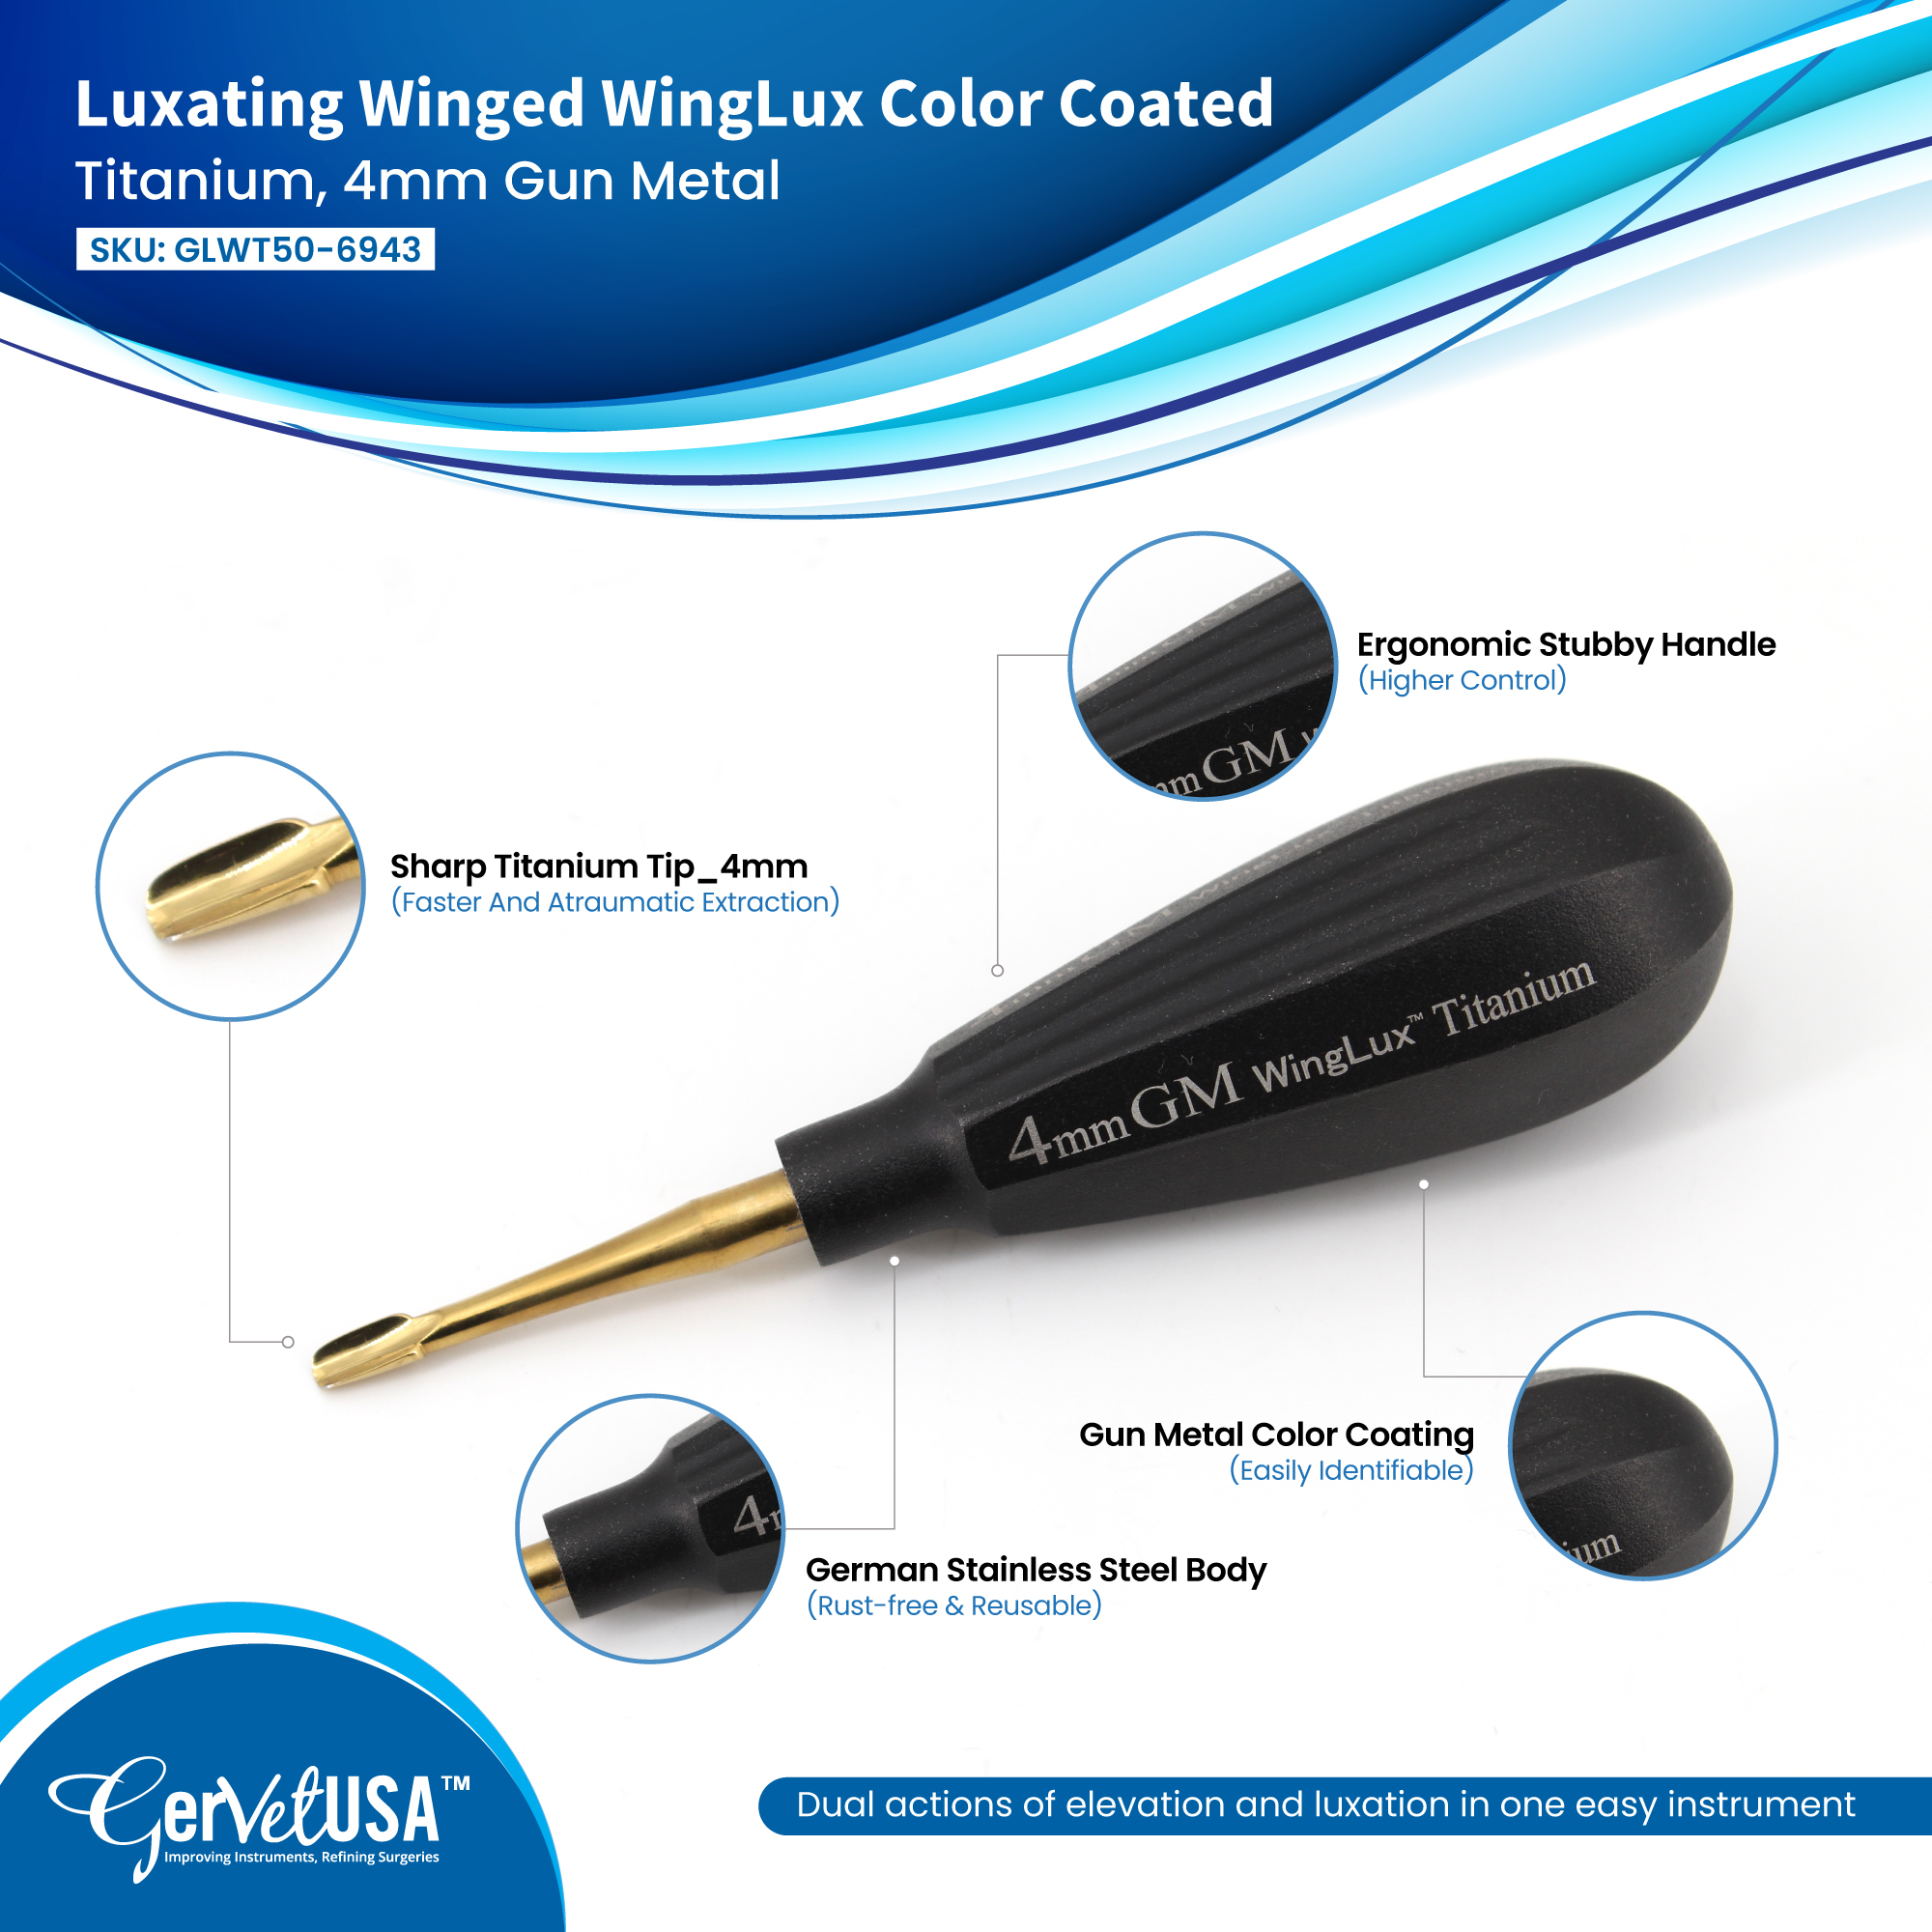 Luxating Winged WingLux Color Coated Titanium, 4mm Gun Metal